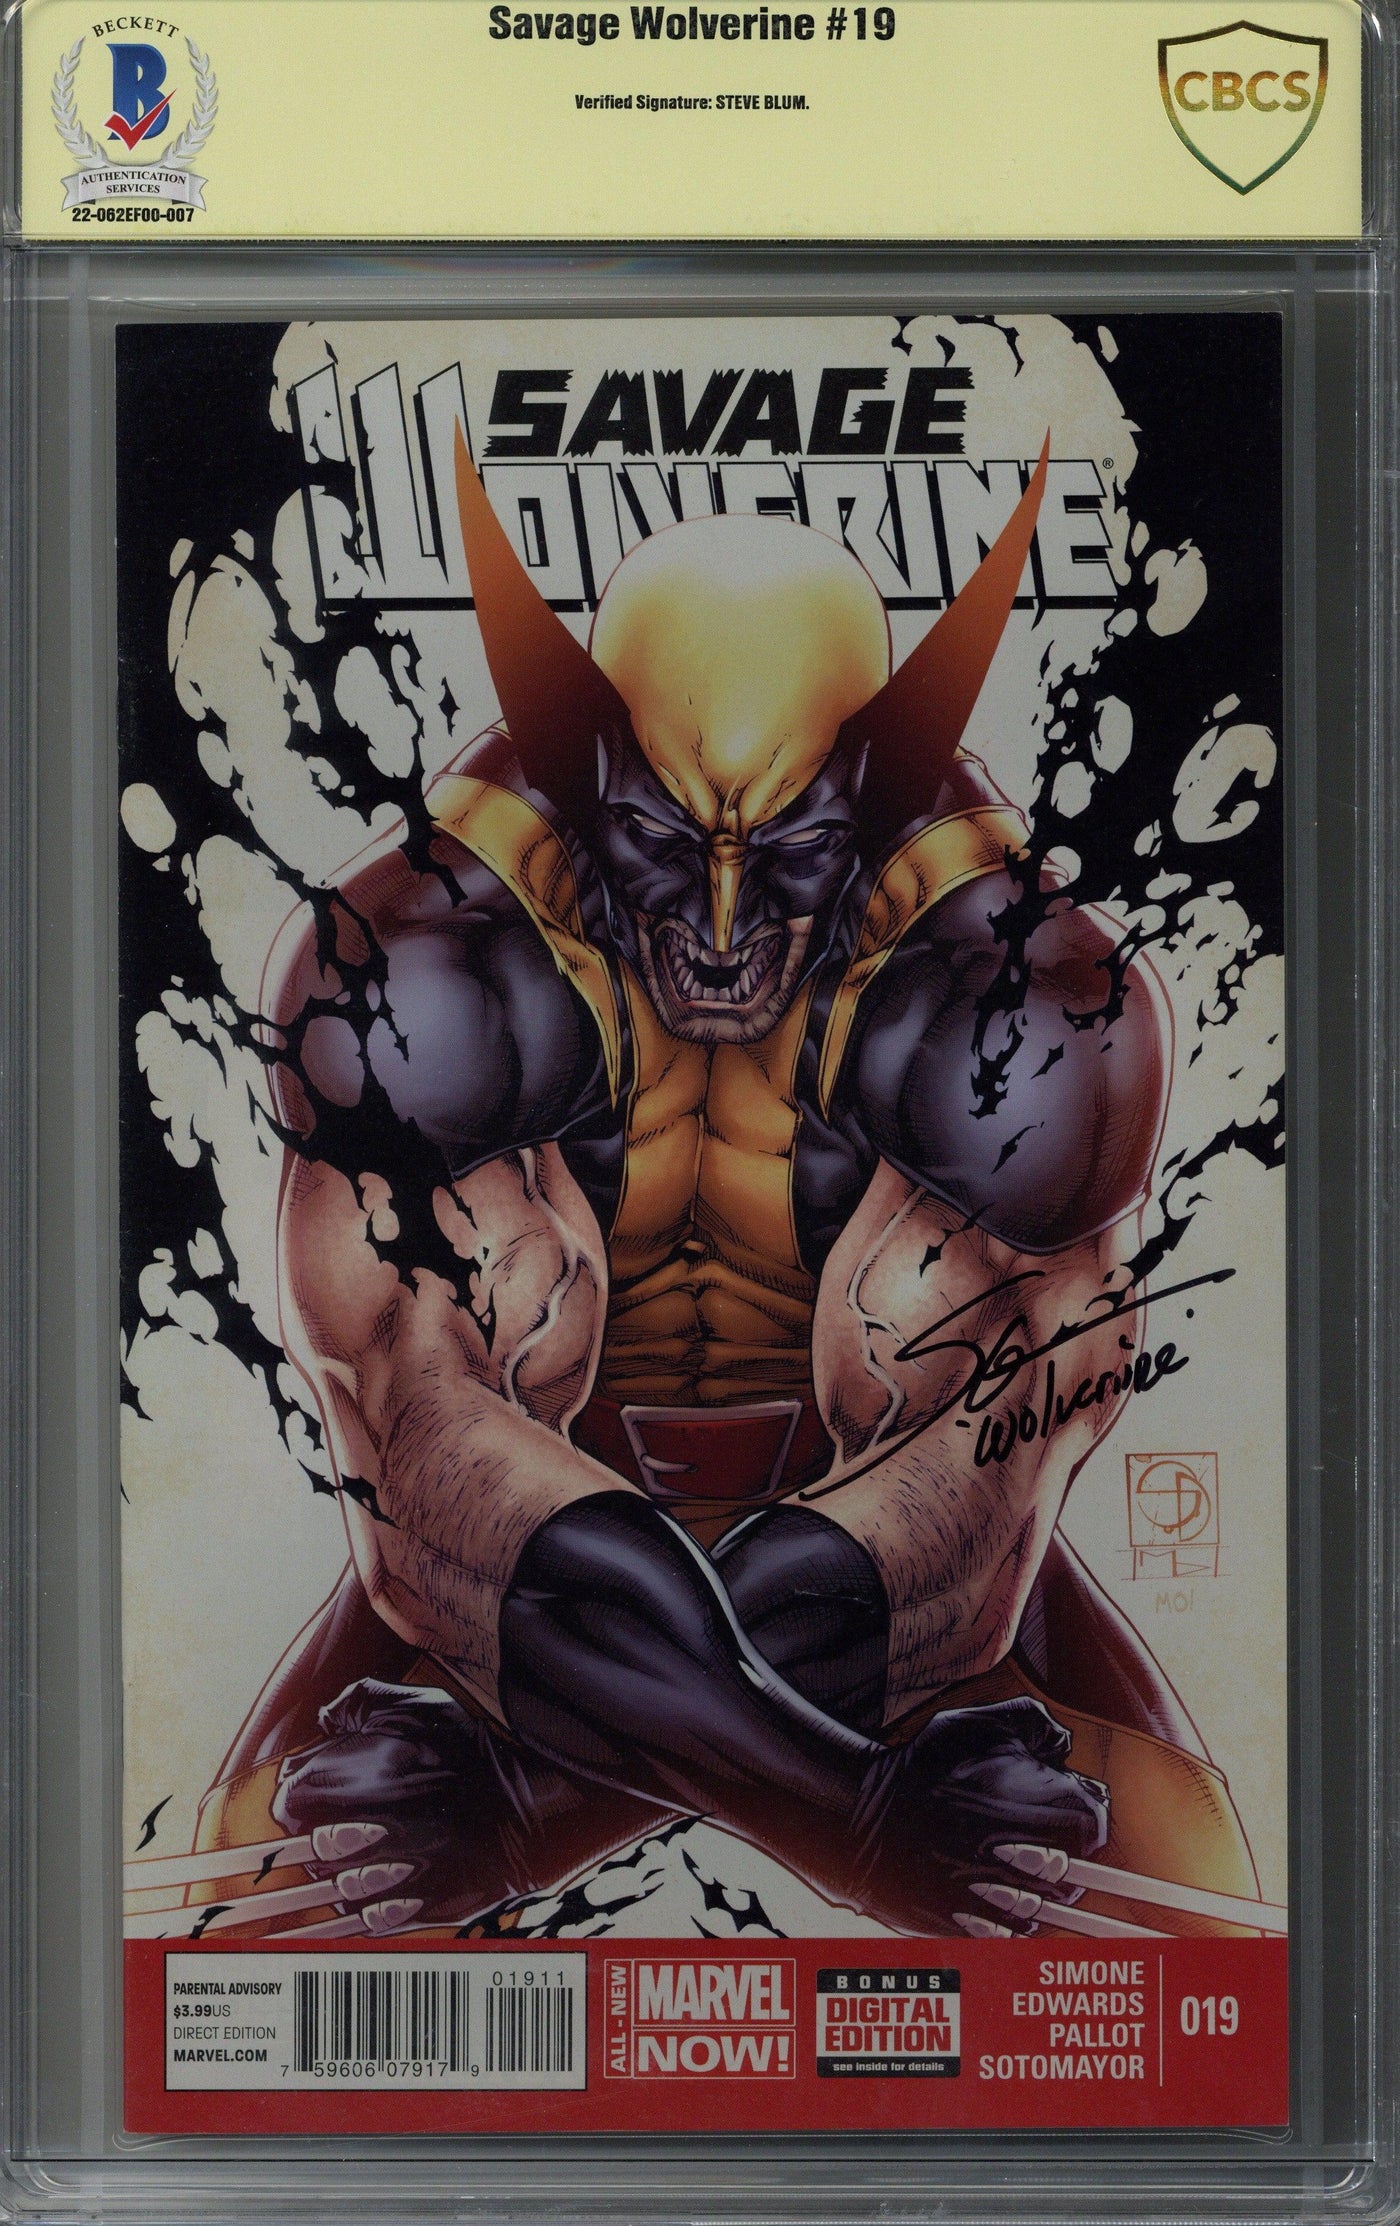 Steve Blum Signed Savage Wolverine #19 Comic Book CBCS